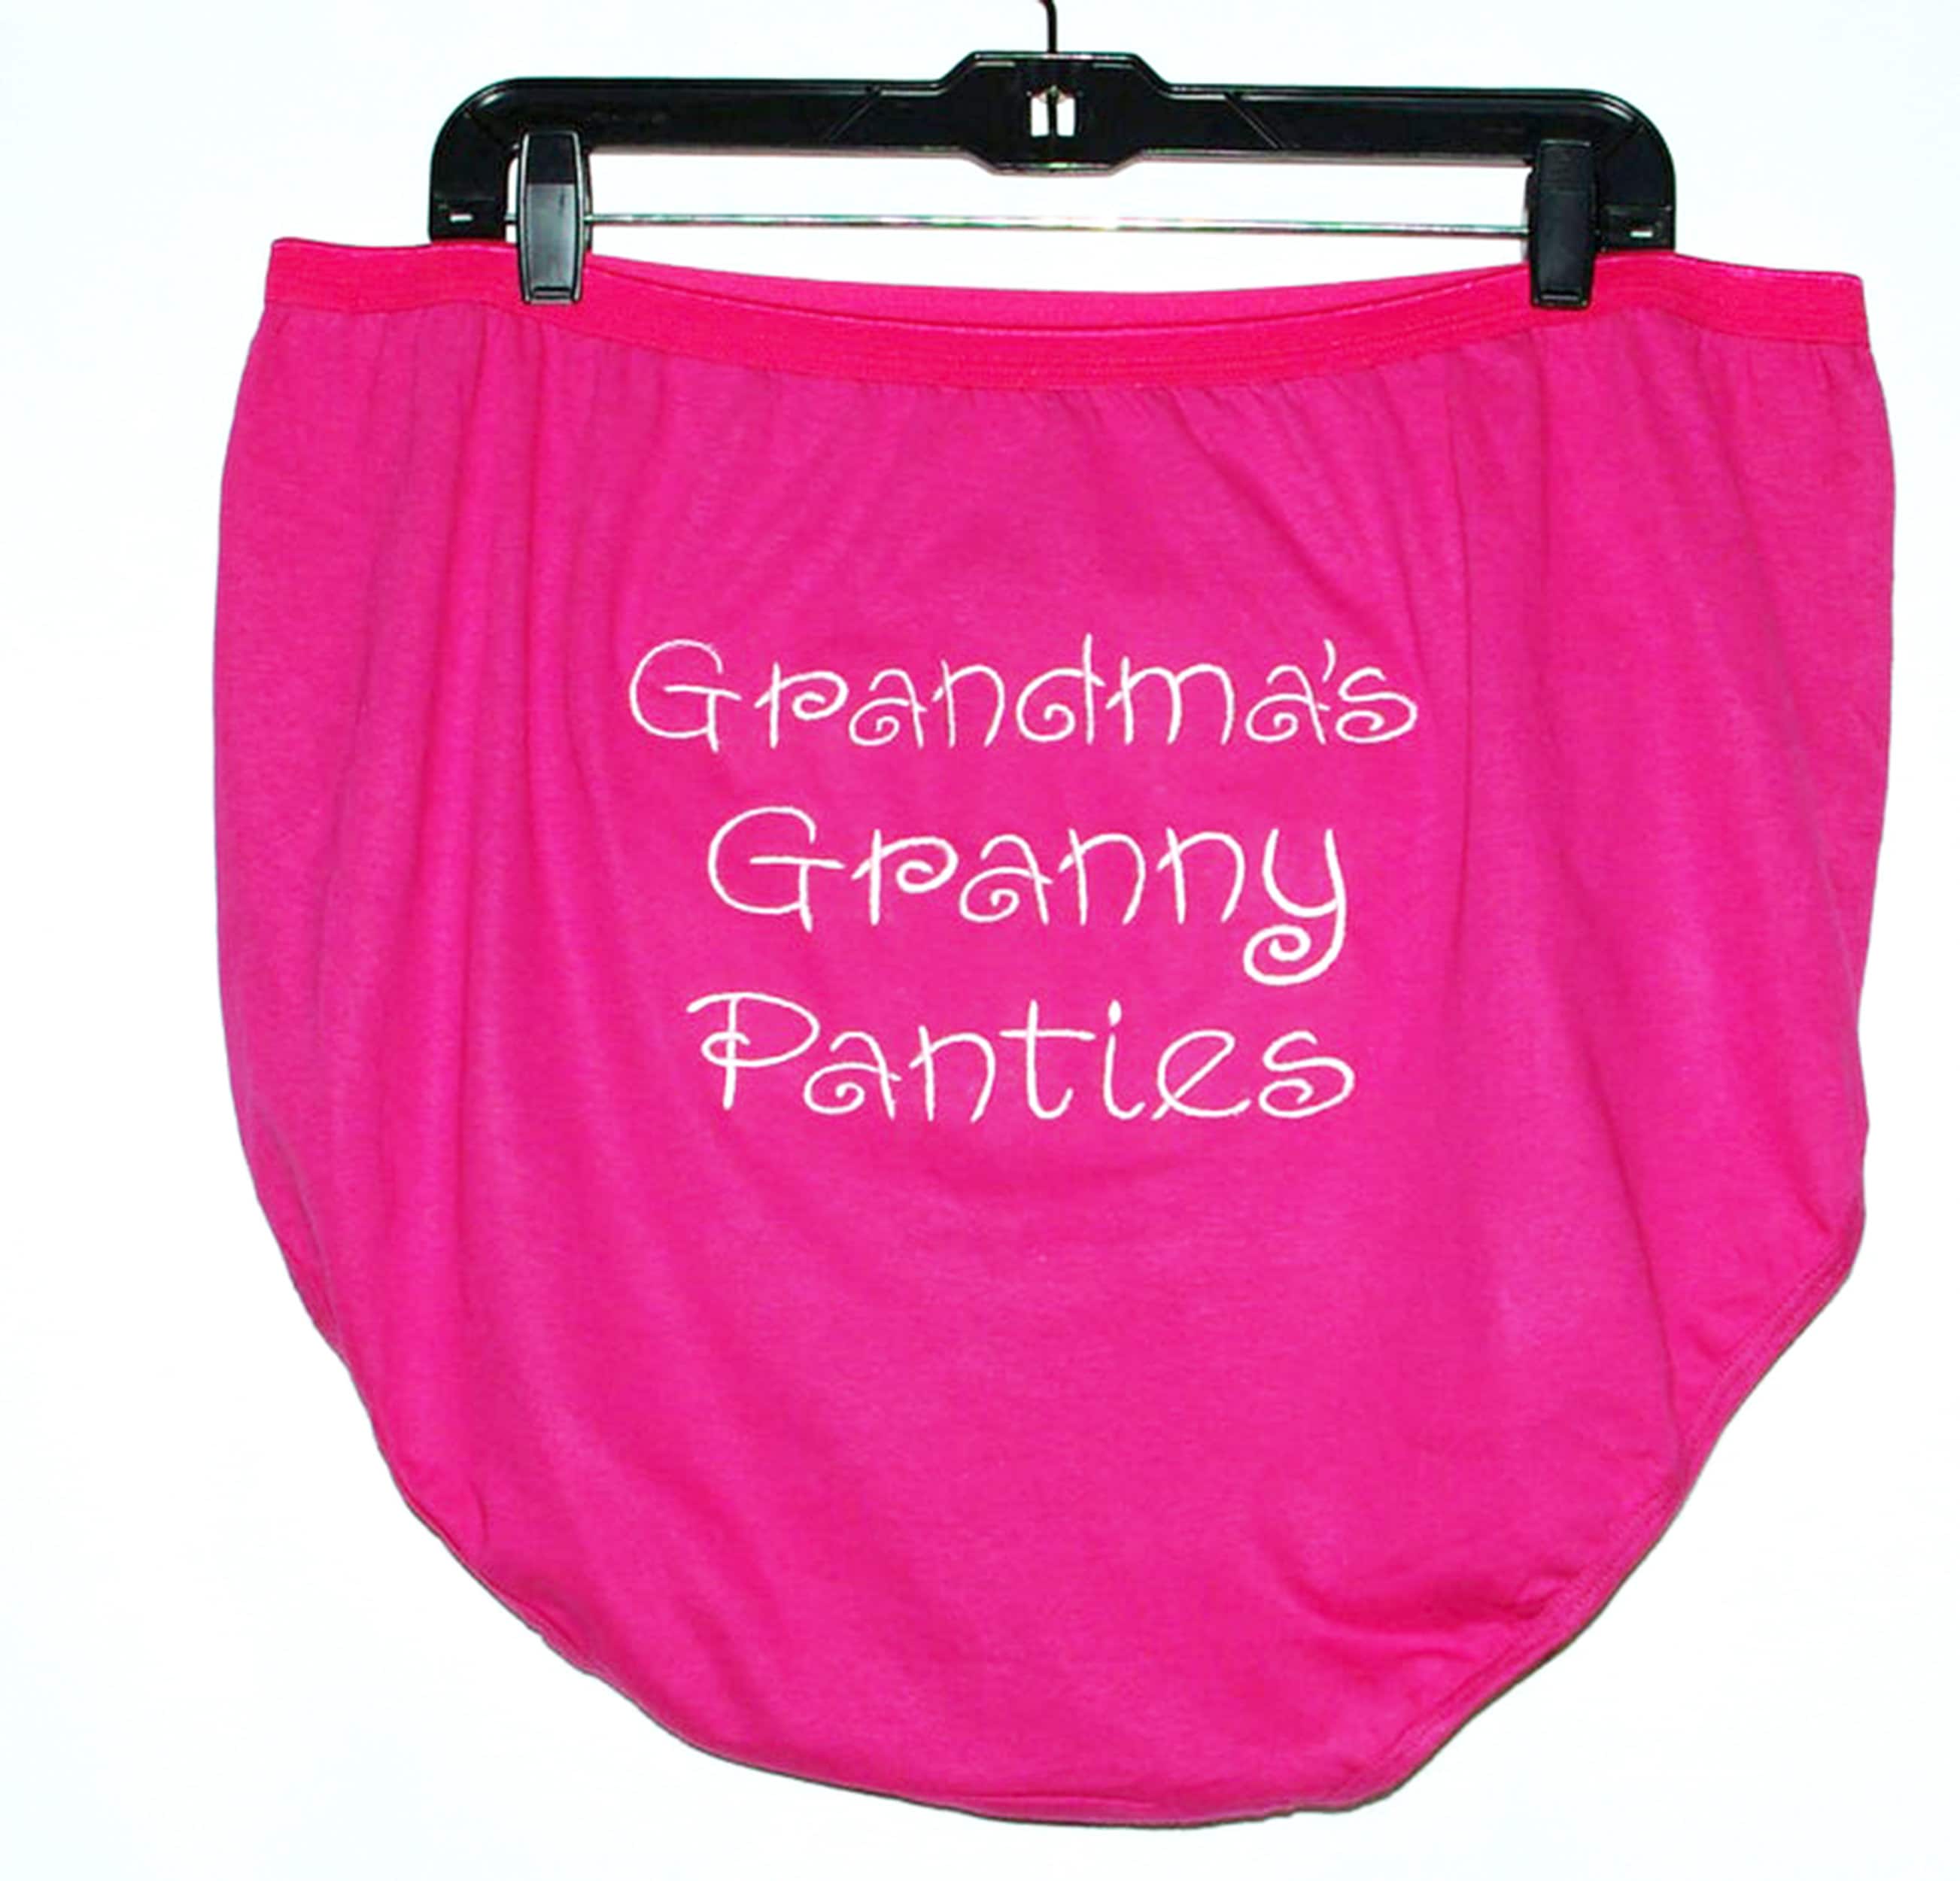 devin merritt add photo granny in granny panties